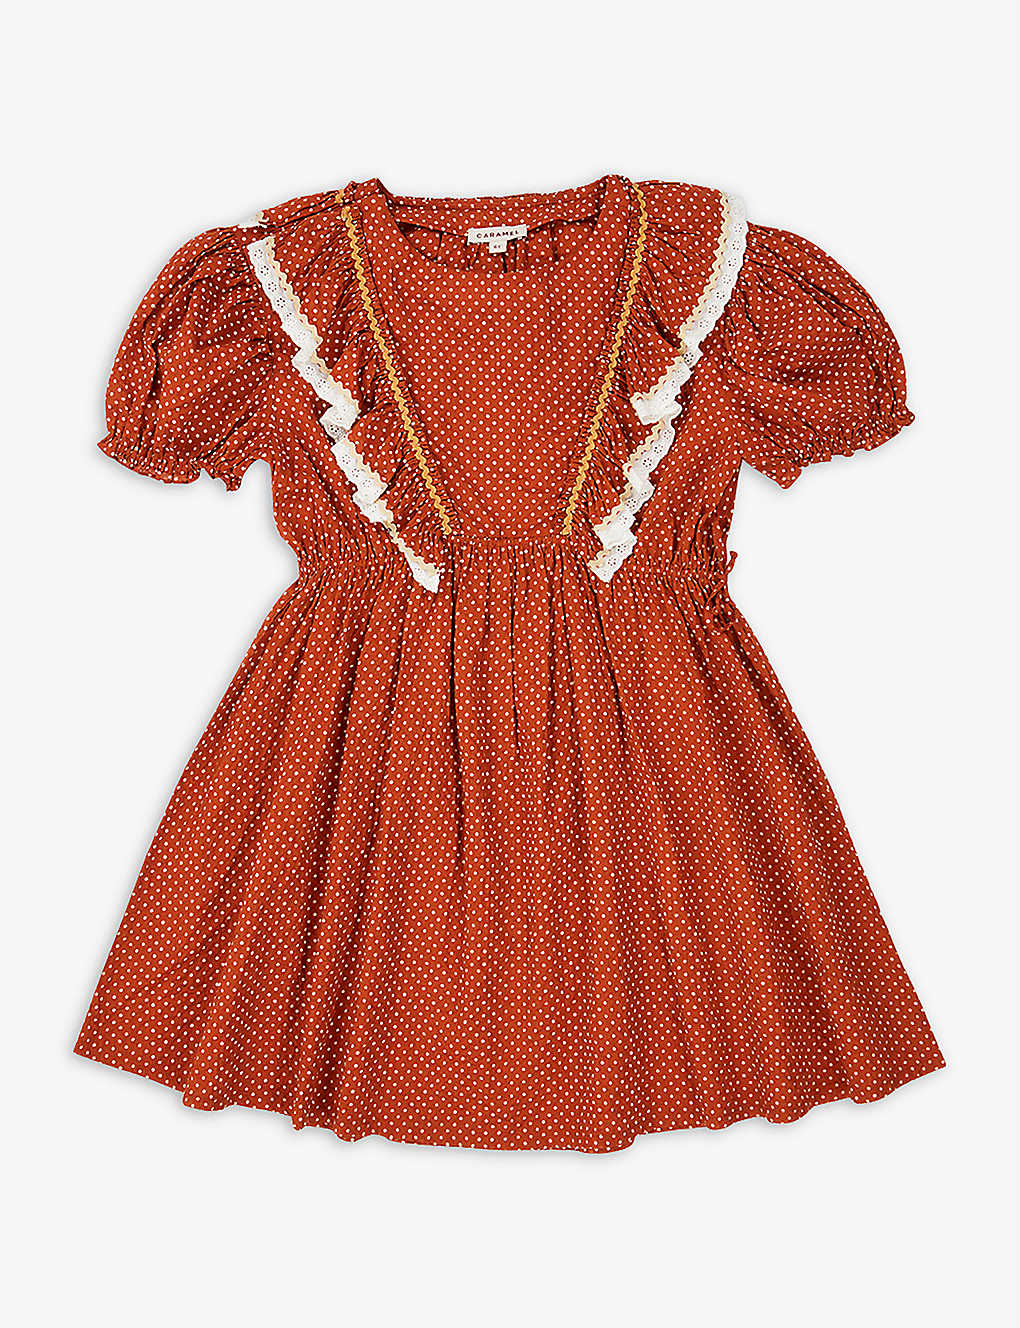 Caramel Kids' Orca Polka Dot Cotton Dress 3-12 Years In Multi-coloured